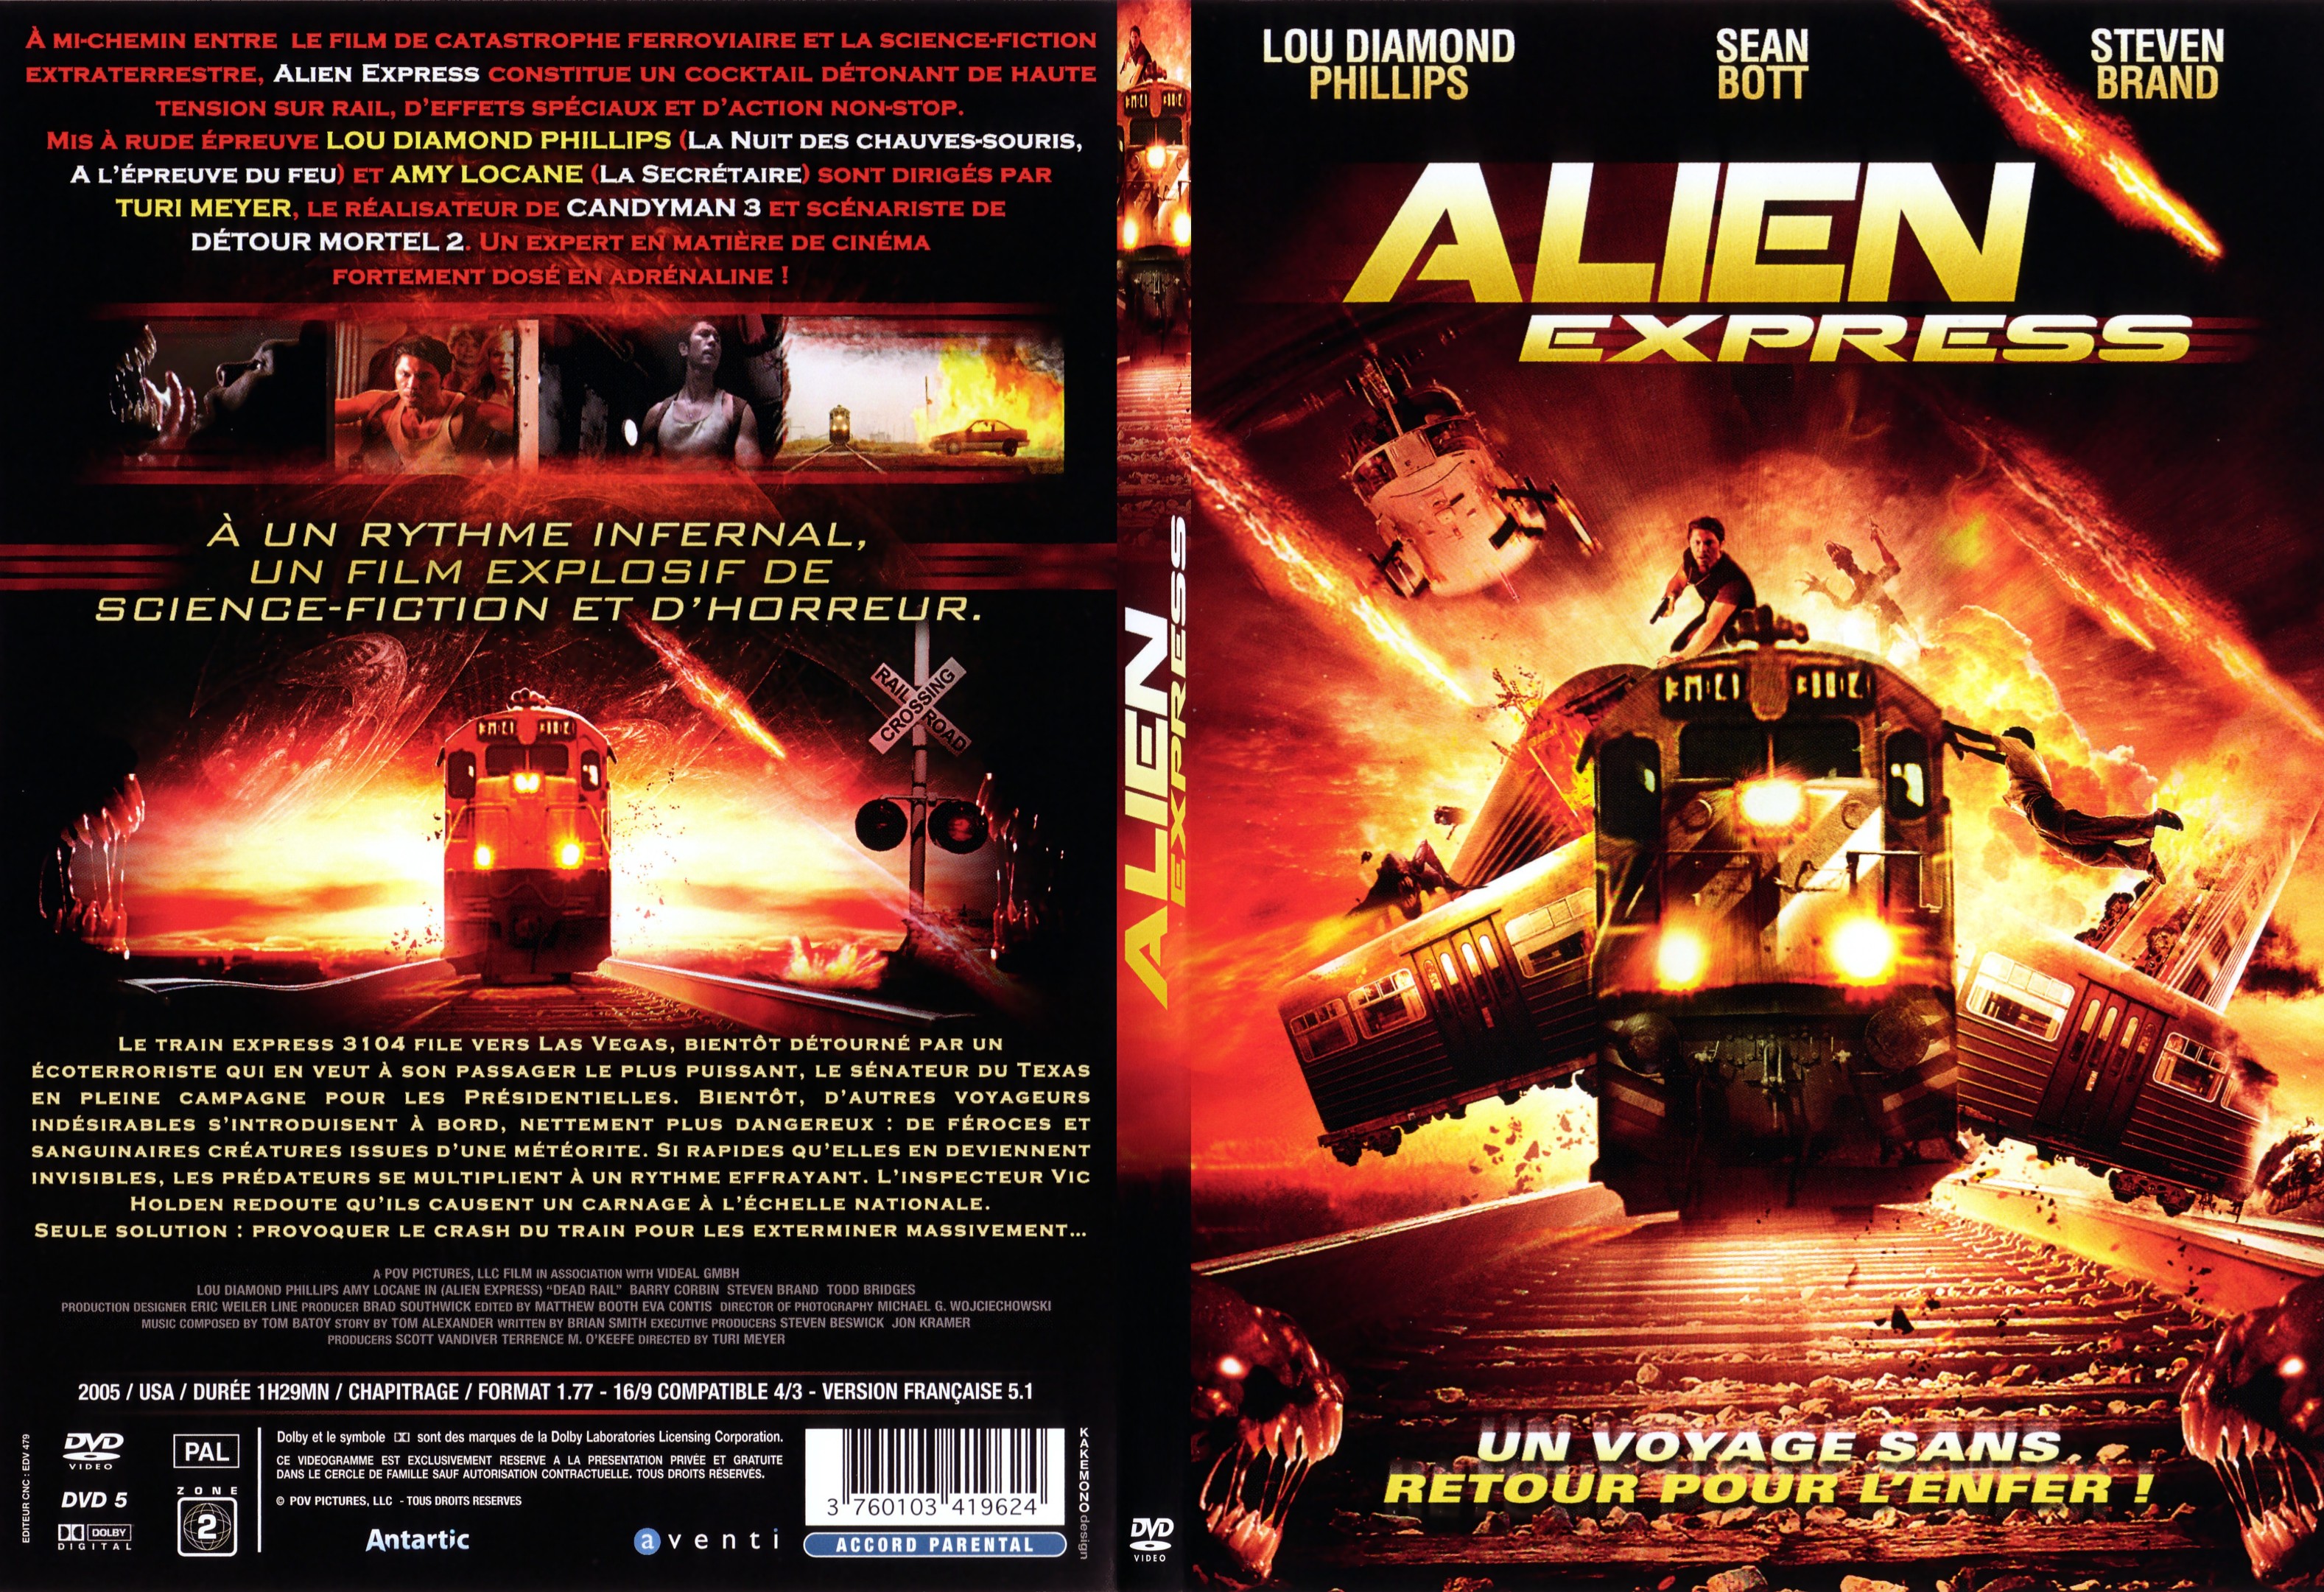 Jaquette DVD Alien express - SLIM